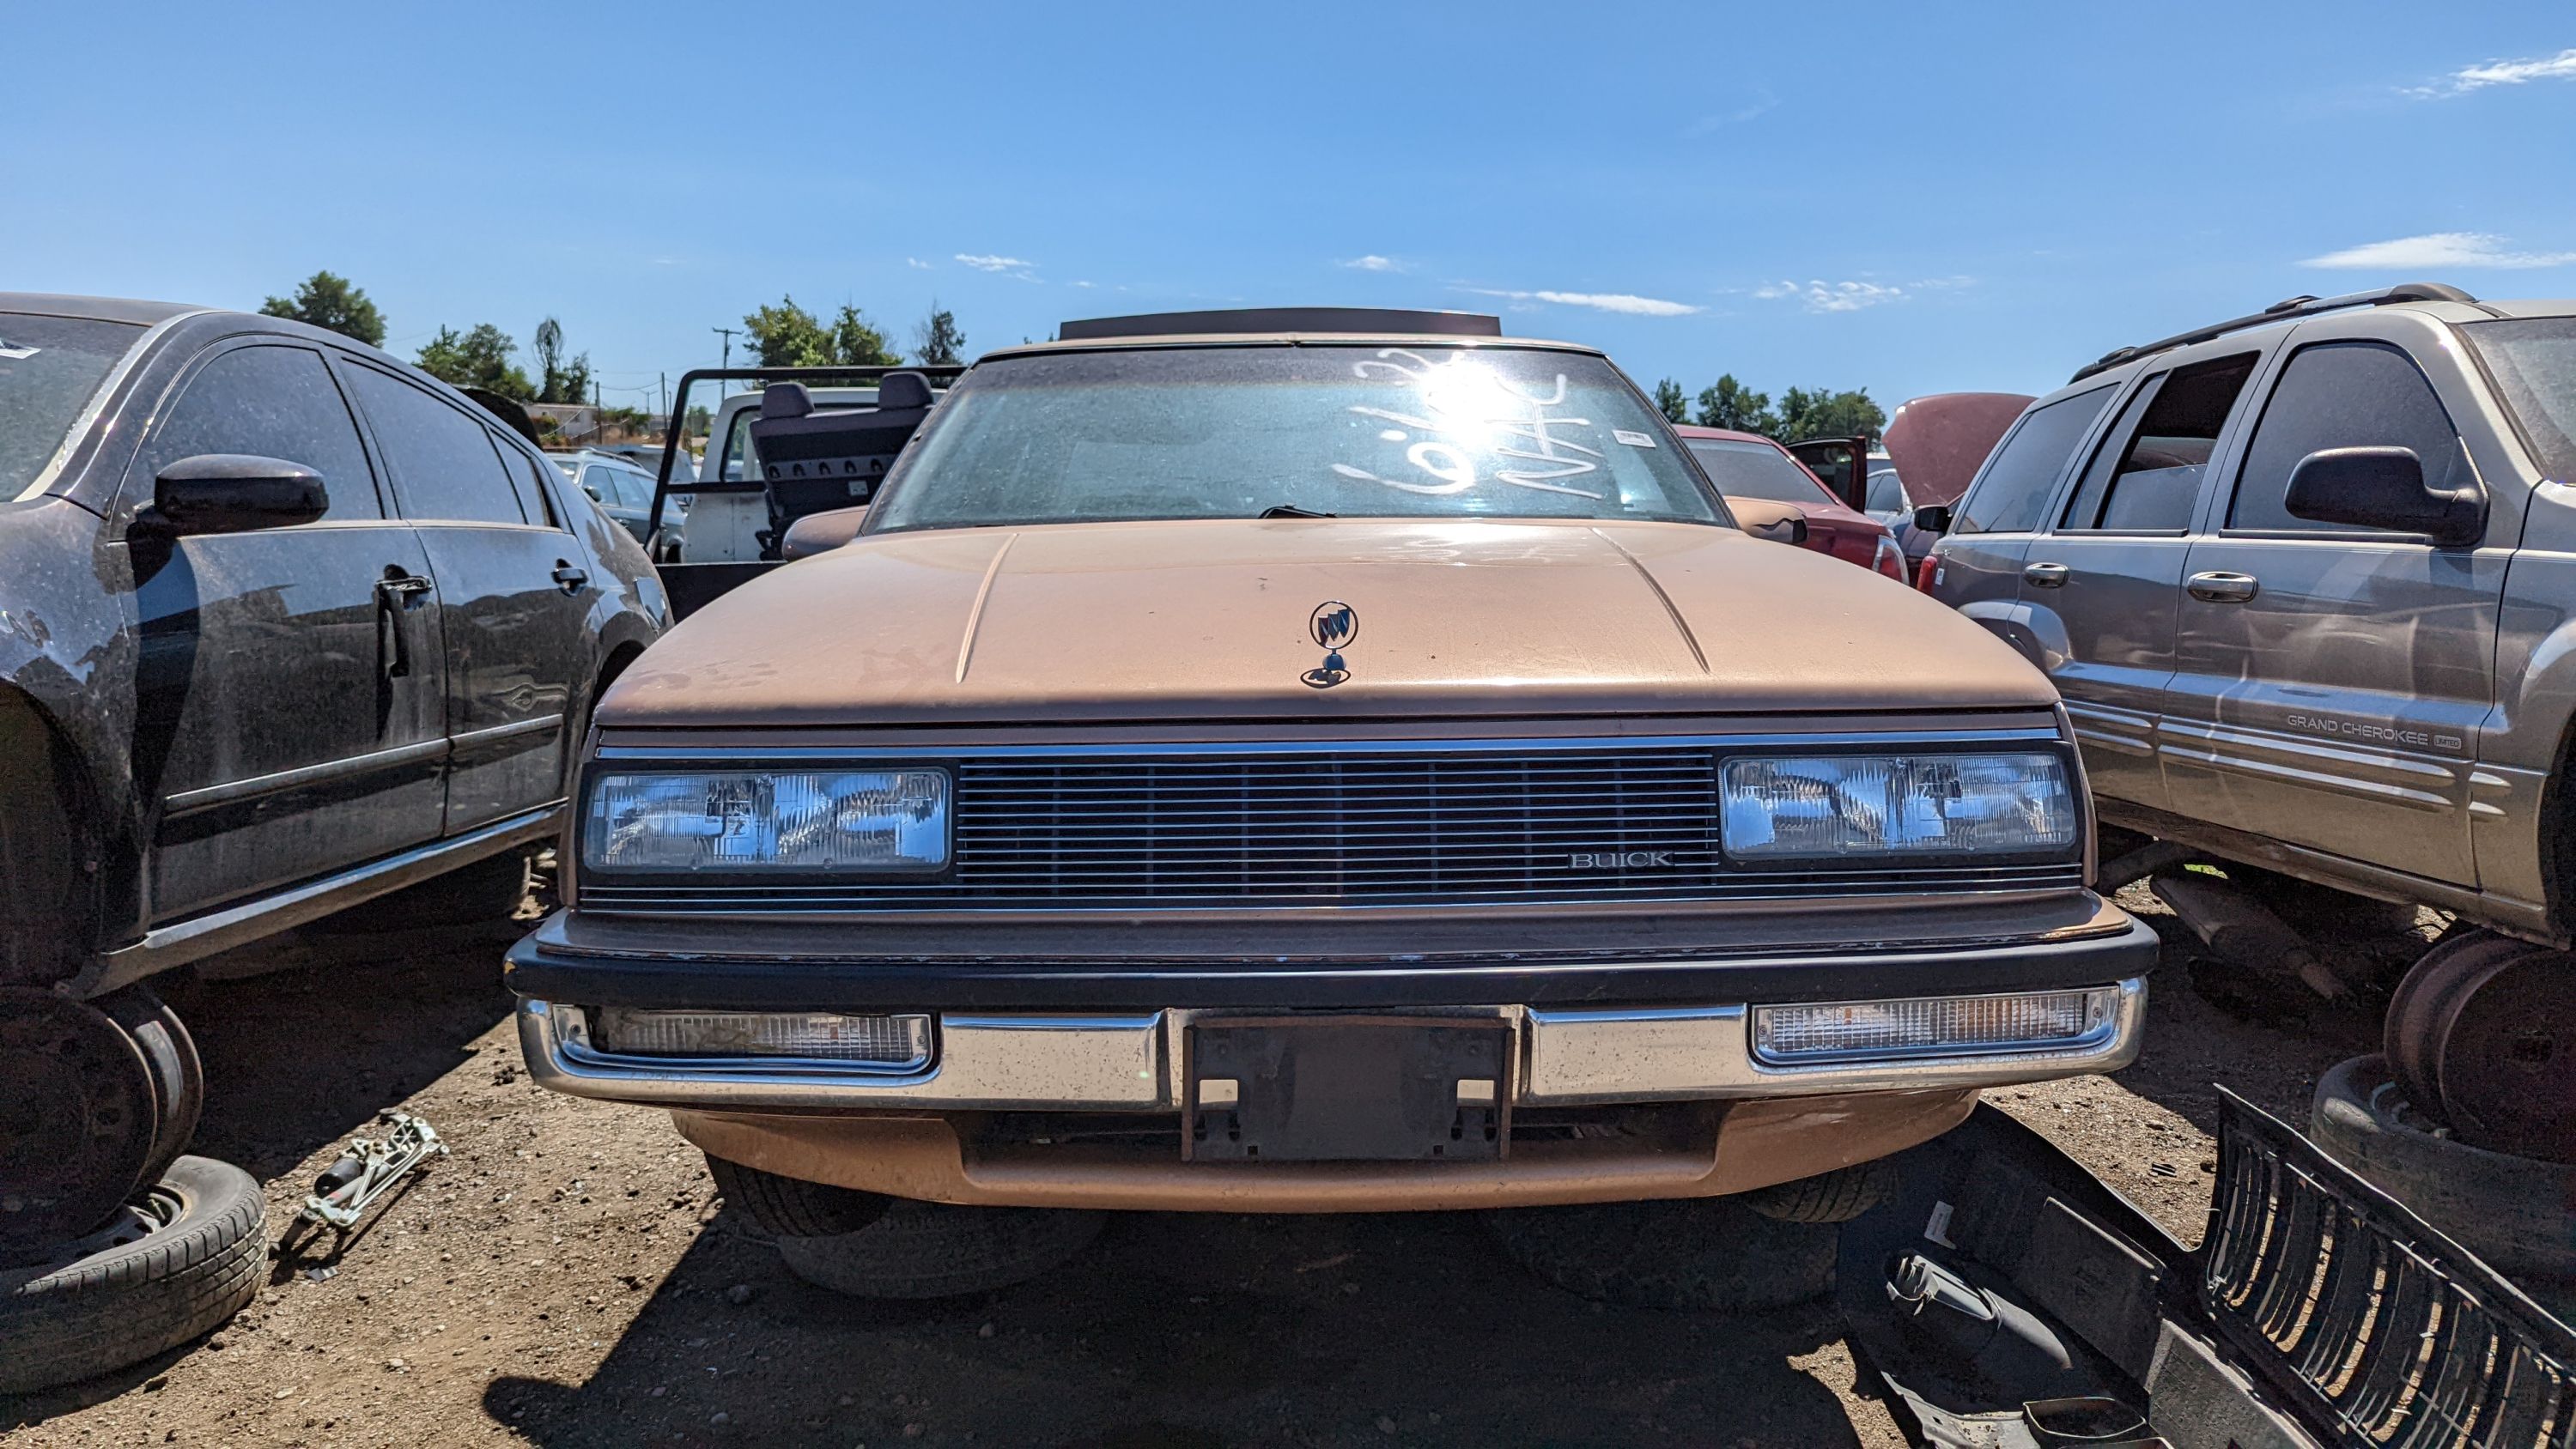 45 - 1988 Buick LeSabre in Colorado junkyard - Photo by Murilee Martin